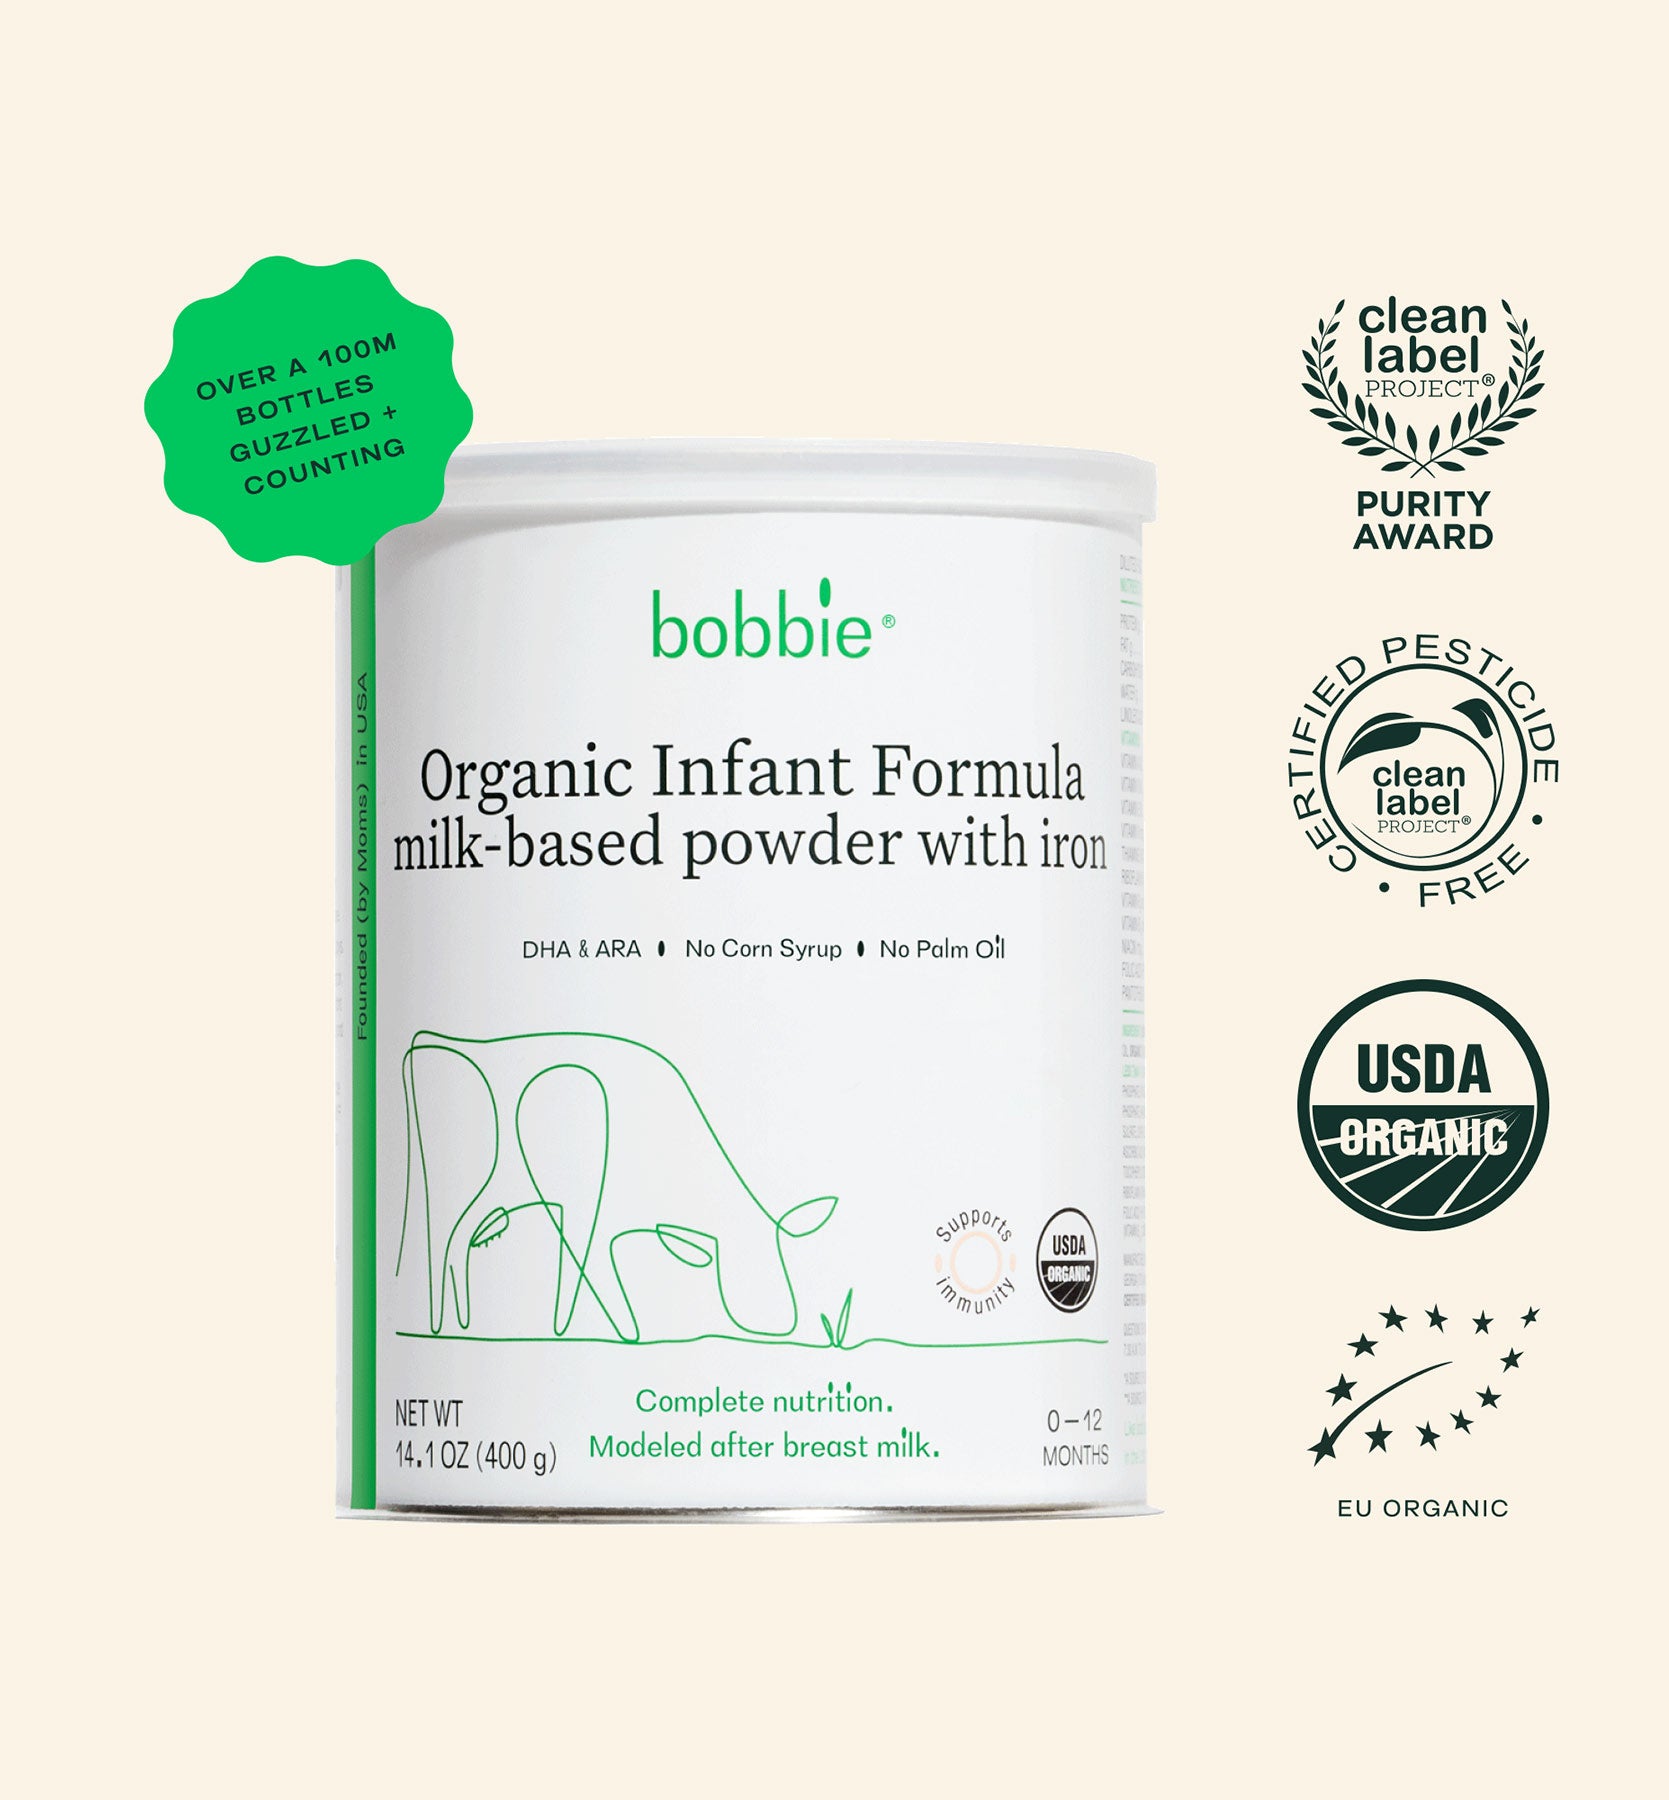 Bobbie Organic Infant Formula - ($24 per can)